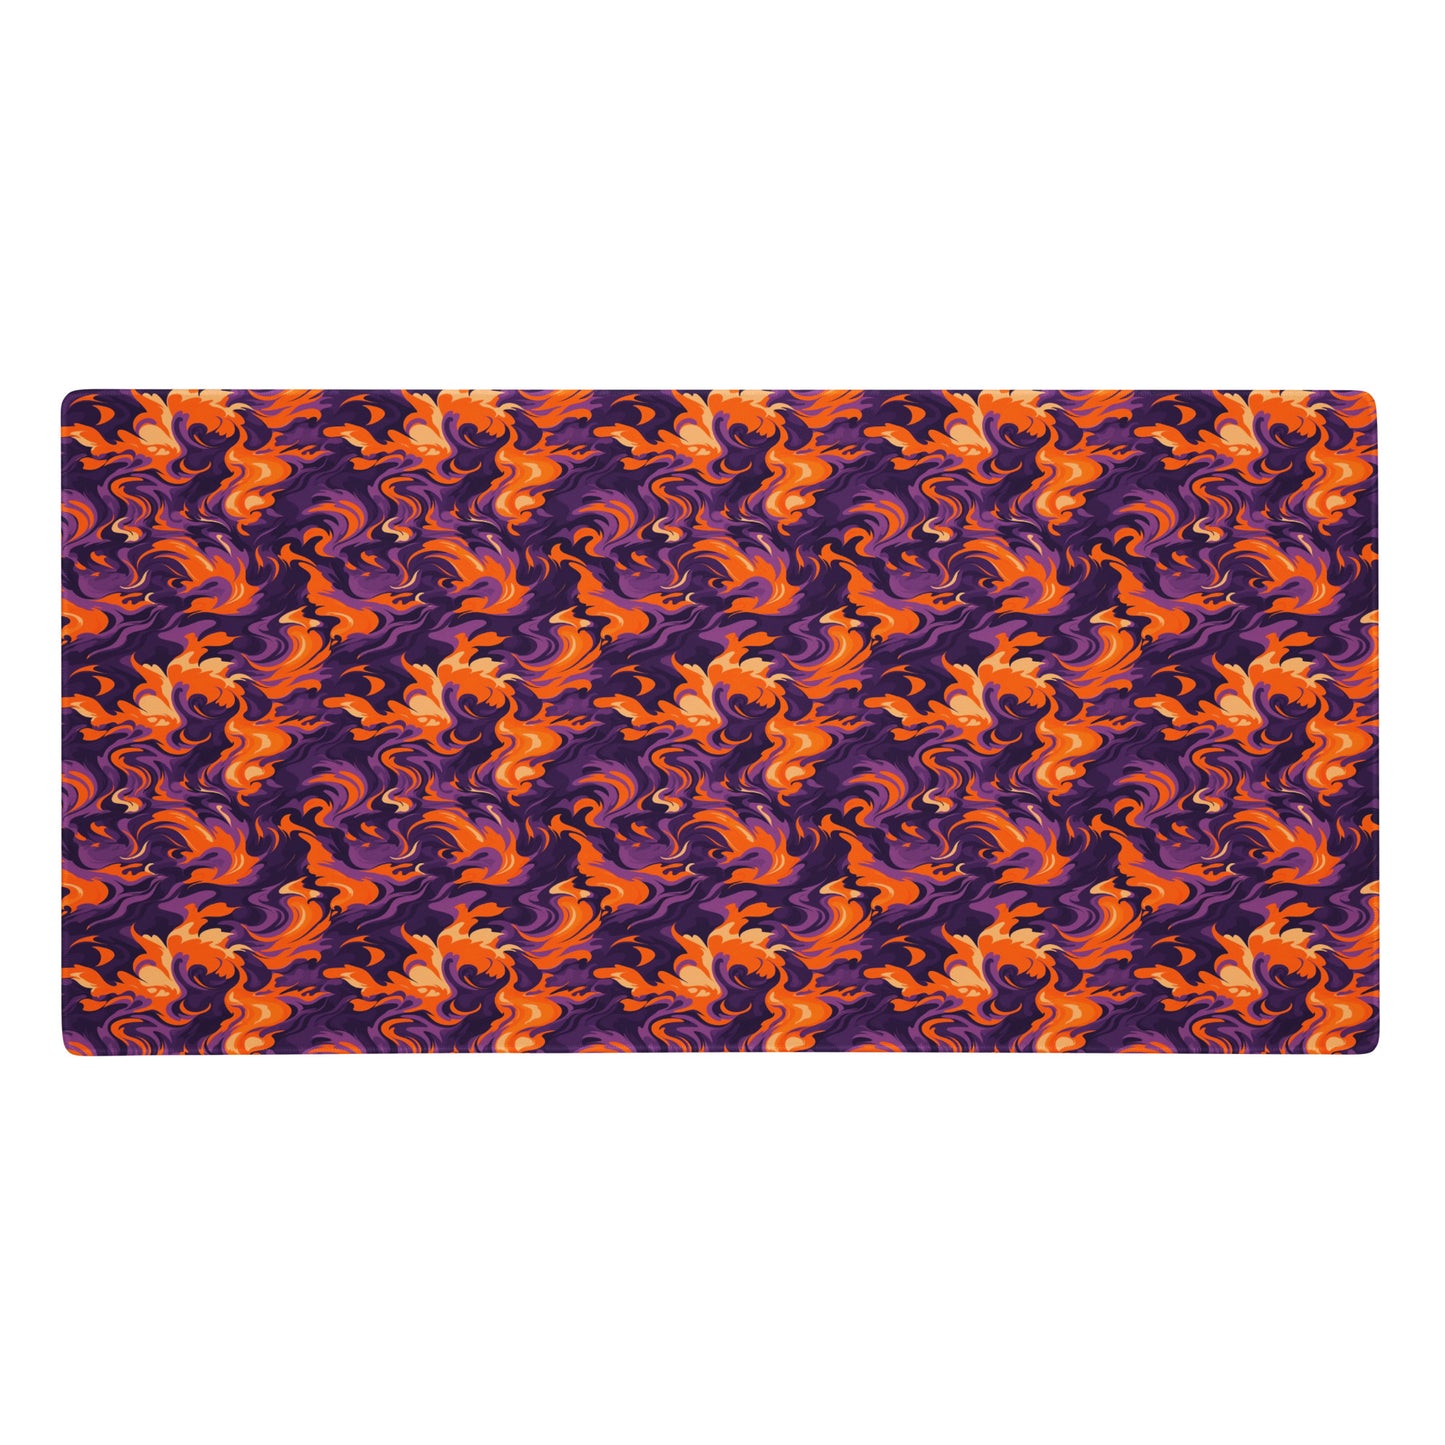 A 36" x 18" desk pad with a purple and orange camo pattern.